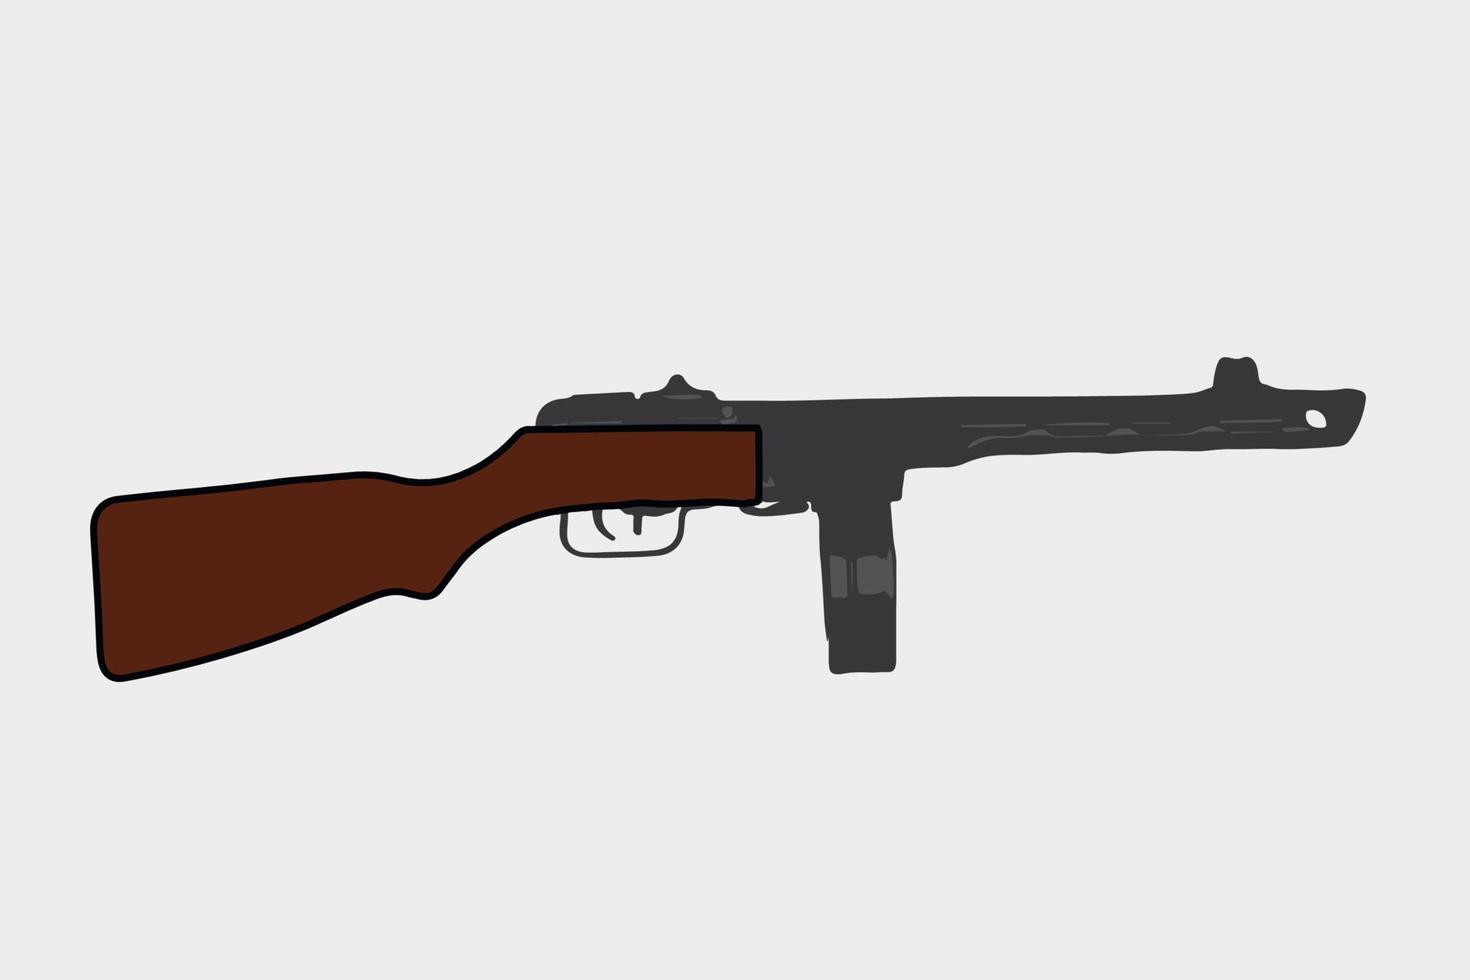 pistola automática soviética rusa ametralladora ppsh 41 ilustración vectorial plana vector